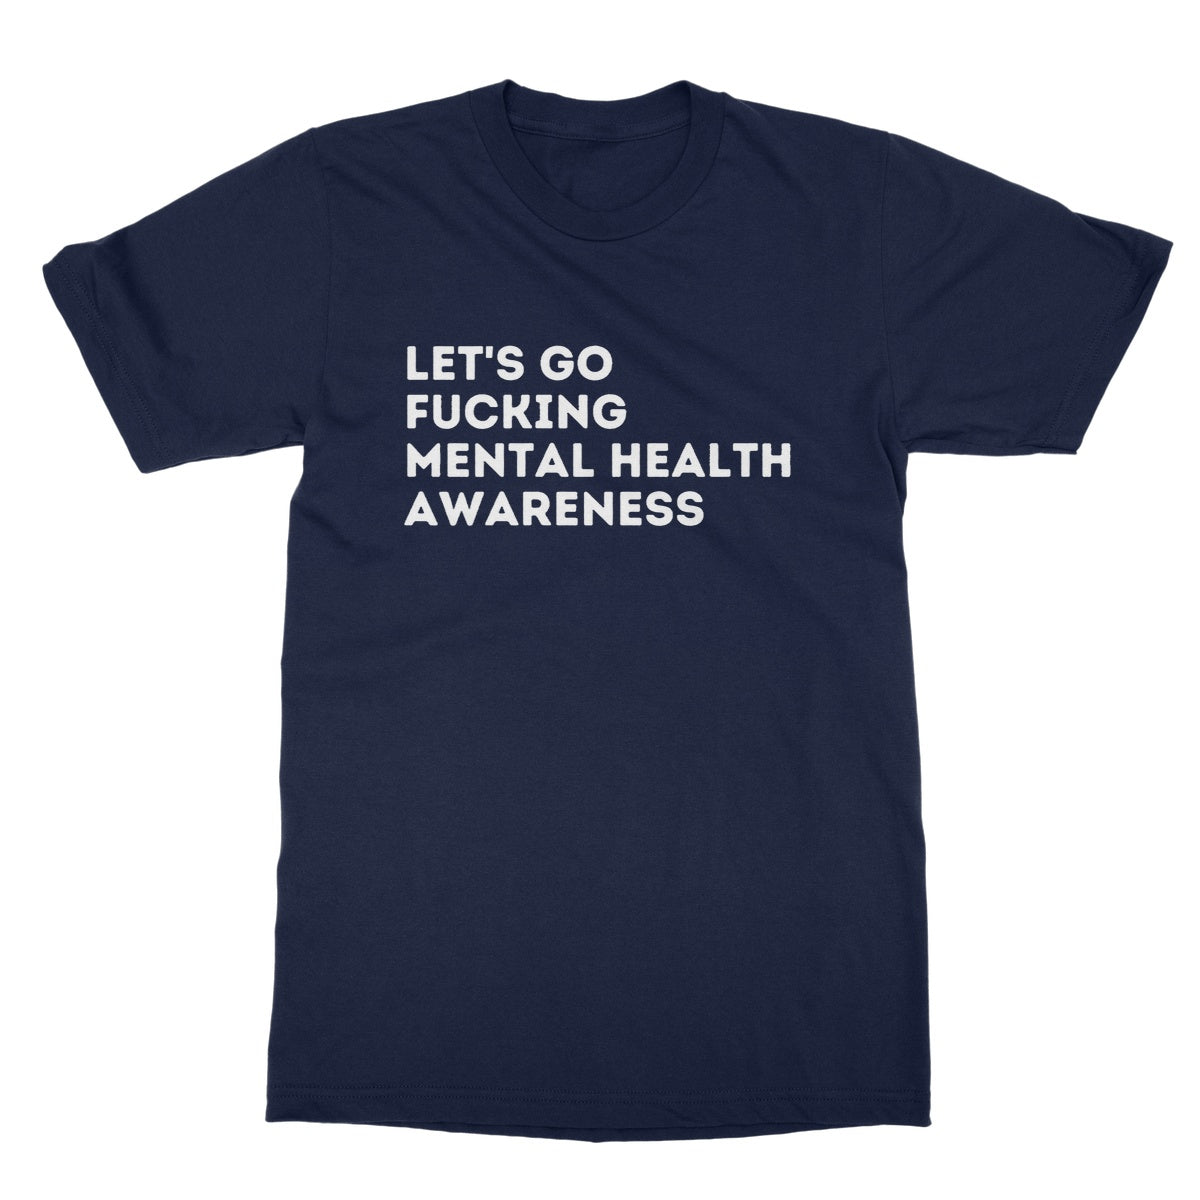 let's go fucking mental health awareness t shirt navy